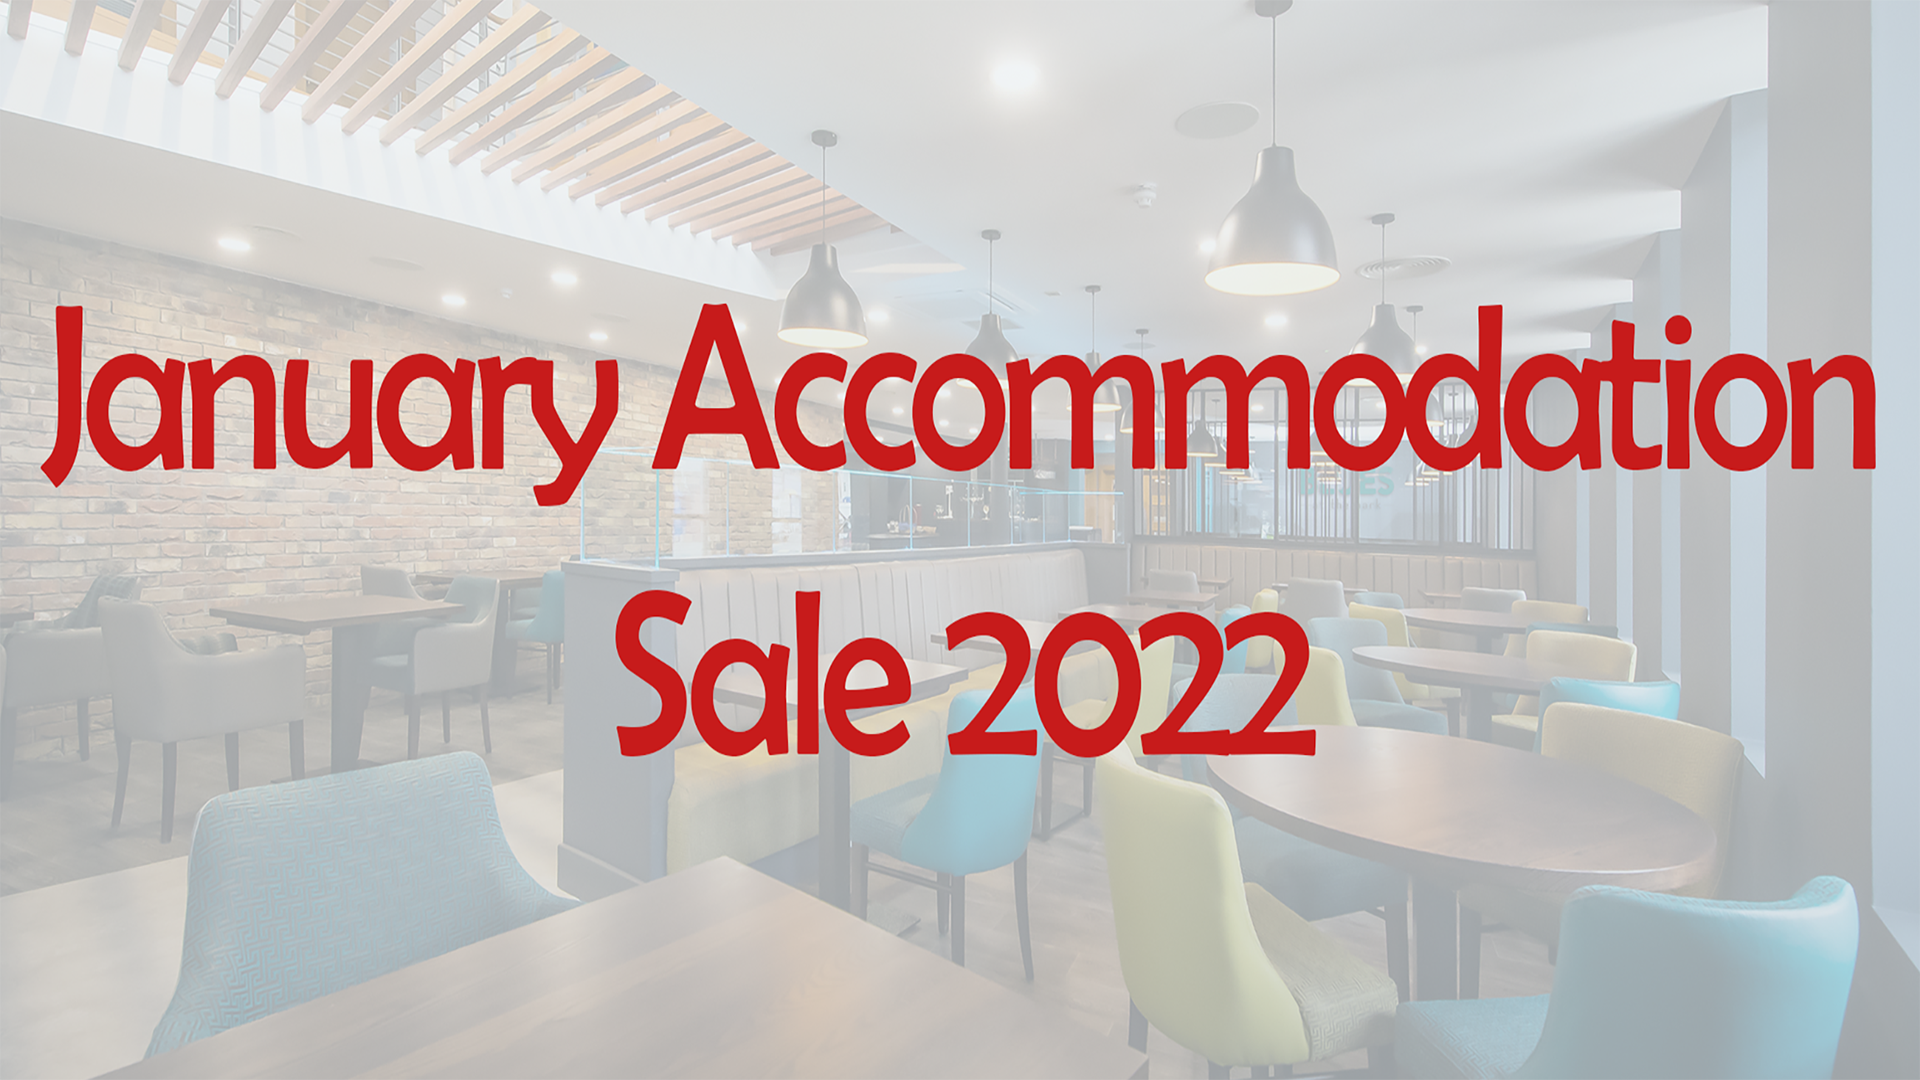 January Accommodation Sale 2022